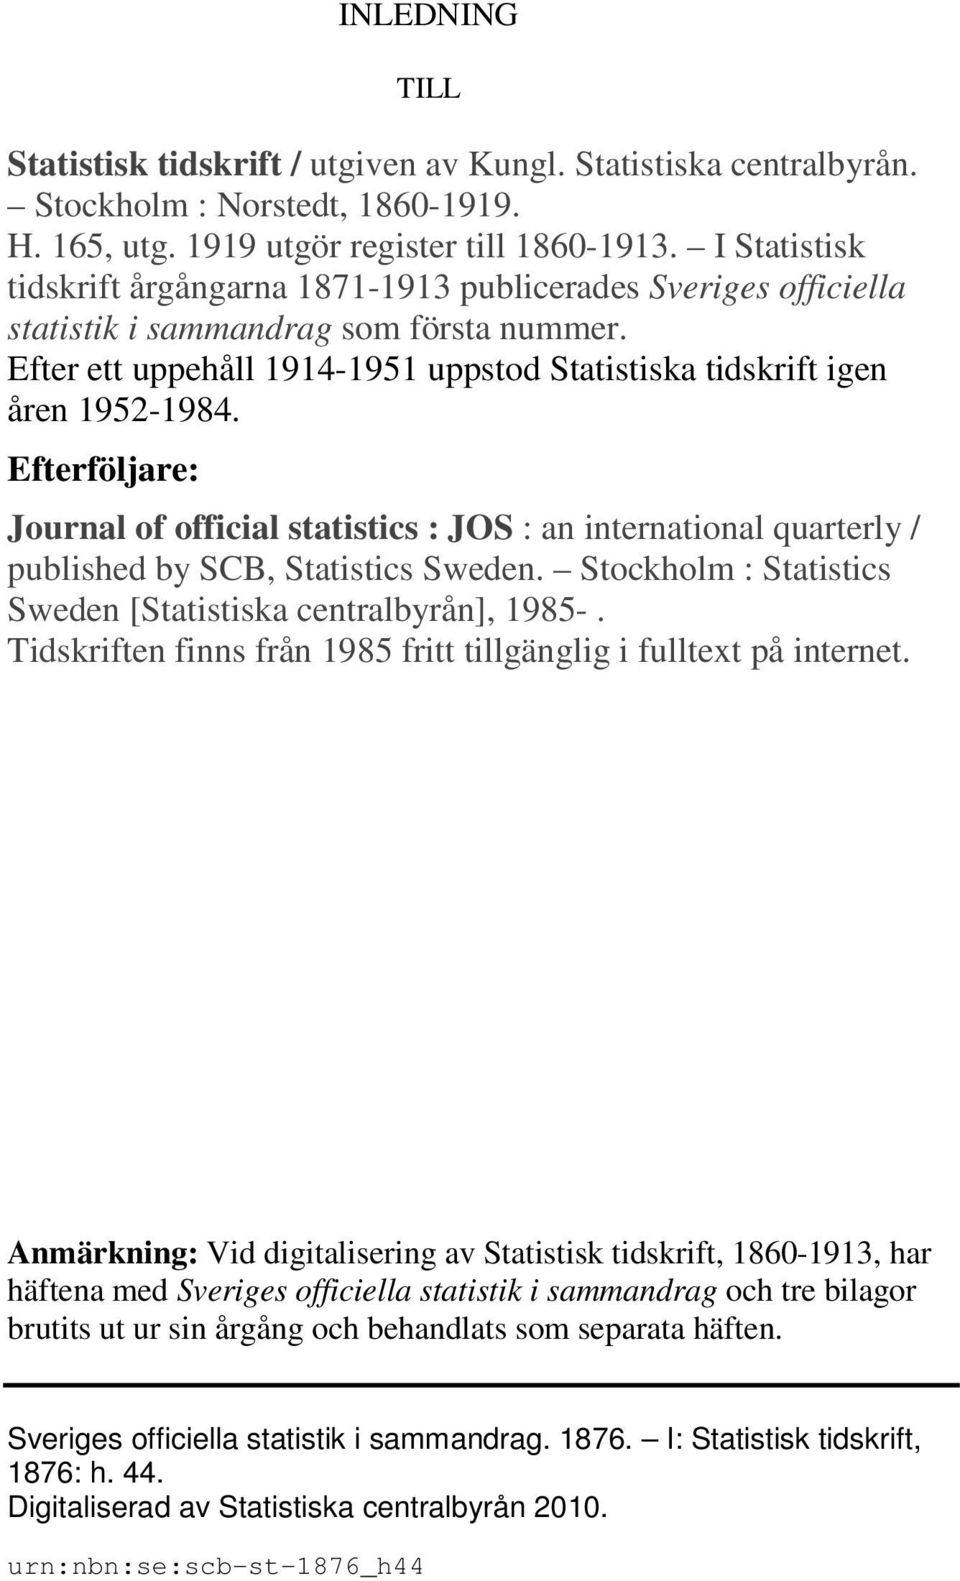 Efterföljare: Journal of official statistics : JOS : an international quarterly / published by SCB, Statistics Sweden. Stockholm : Statistics Sweden [Statistiska centralbyrån], 1985-.